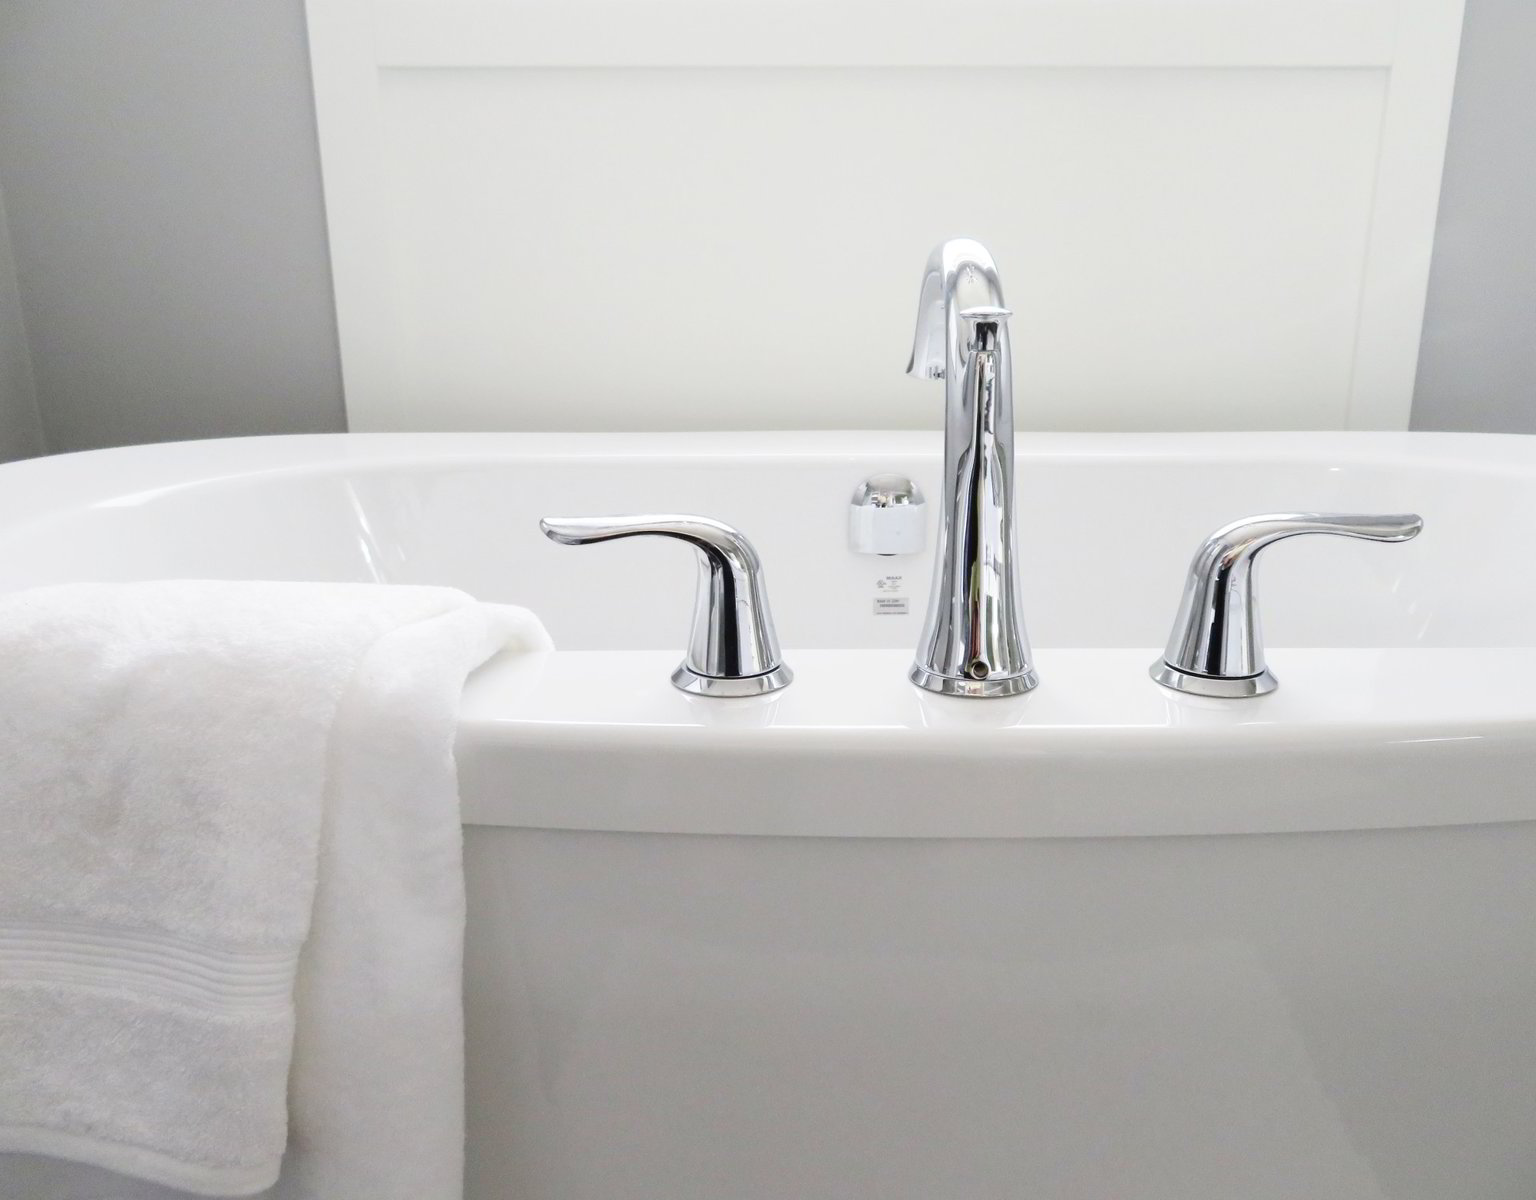 How To Fix A Leaky Bathtub Faucet, Installing New Bathtub Faucet Handles